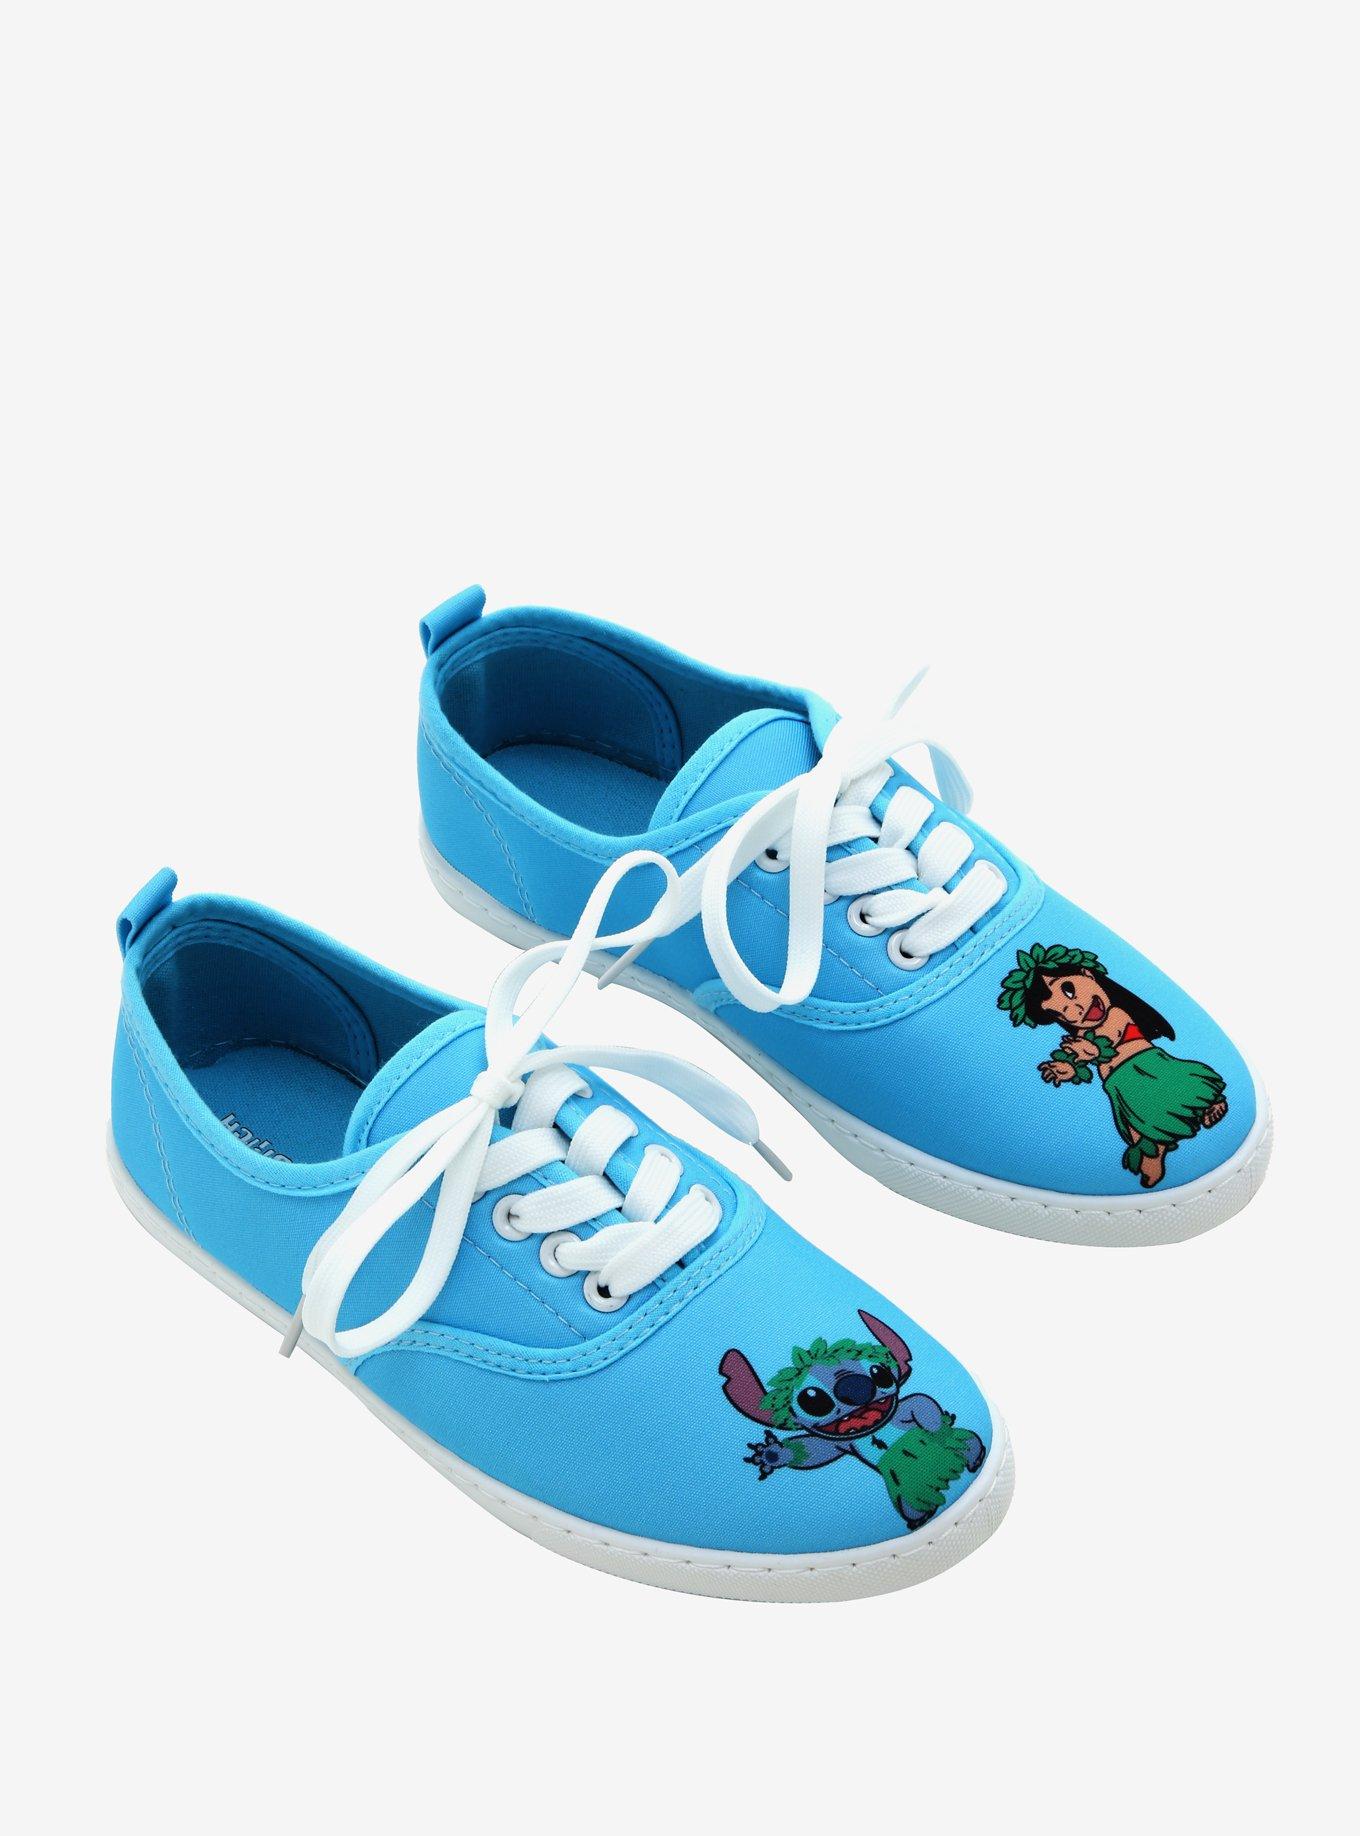 Kids Lilo and Stitch Shoes 